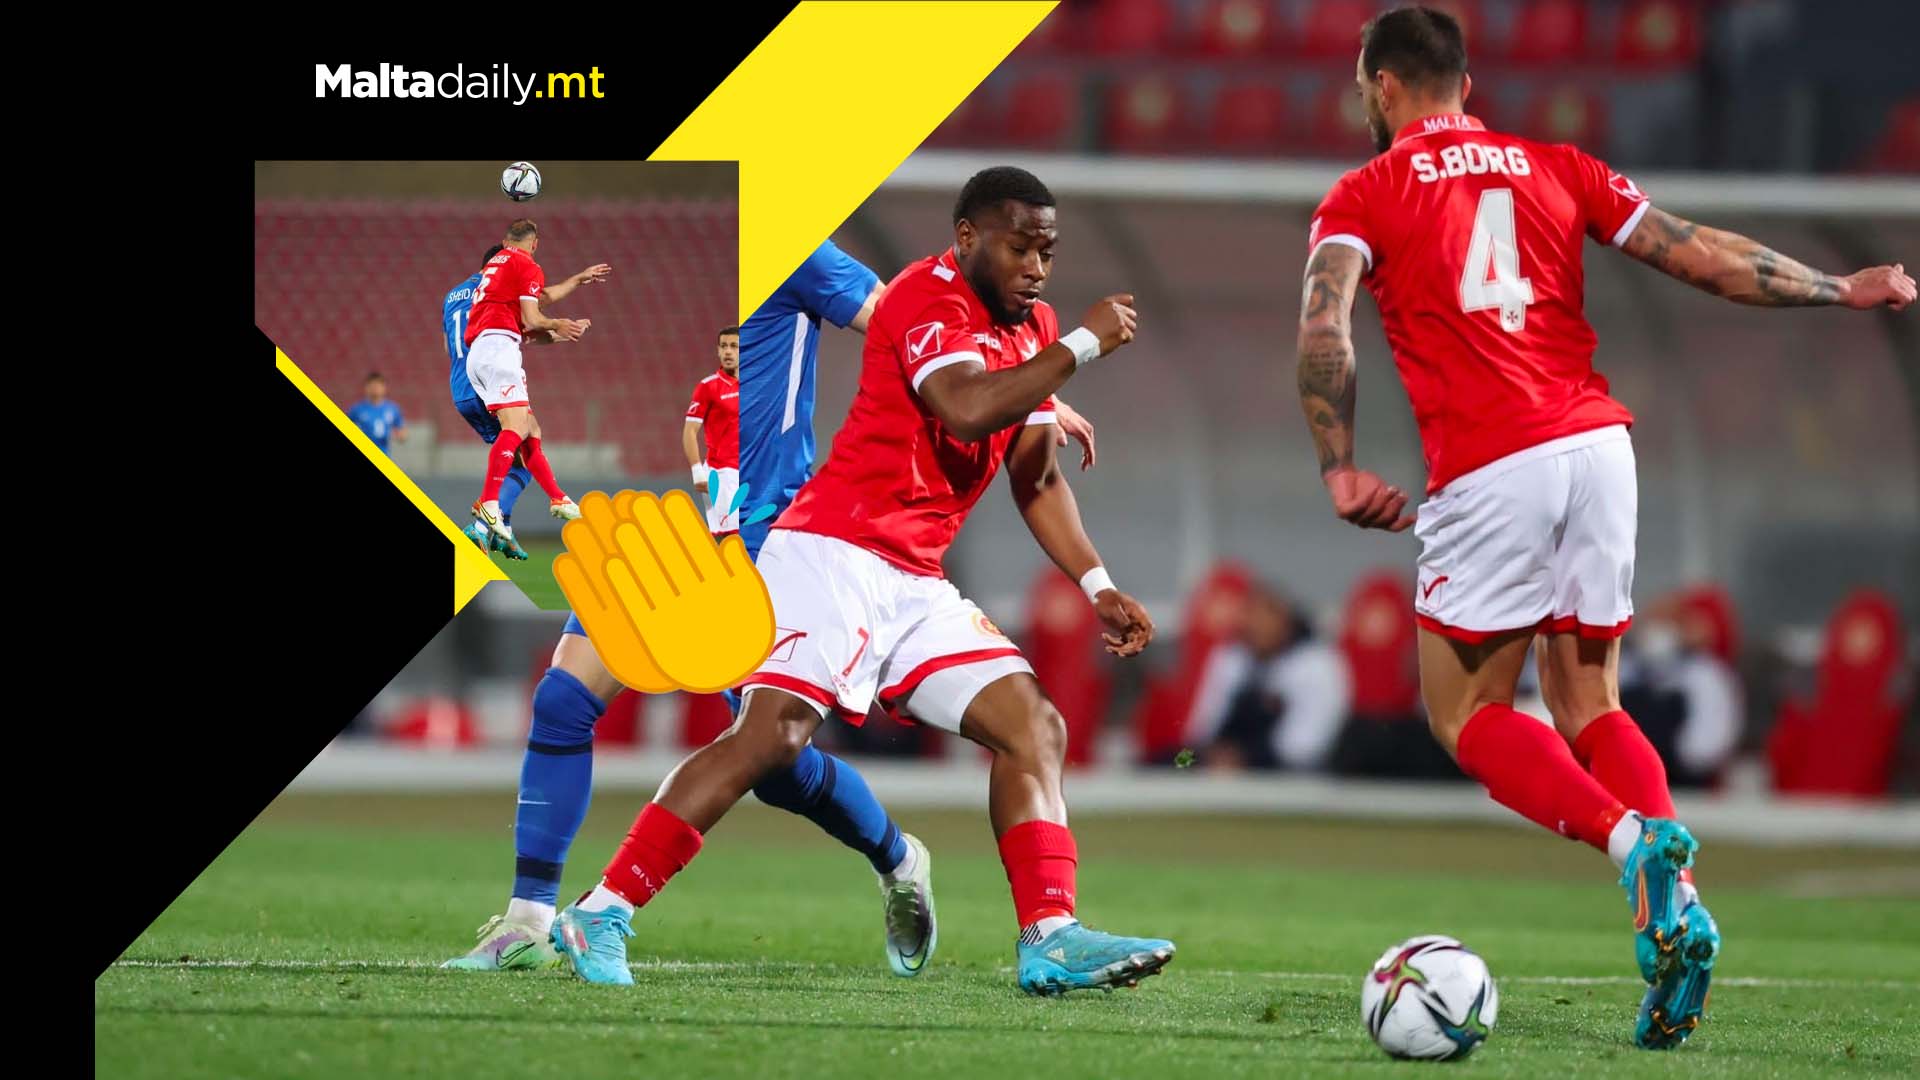 Malta beats Azerbaijan 1-0 in friendly international match